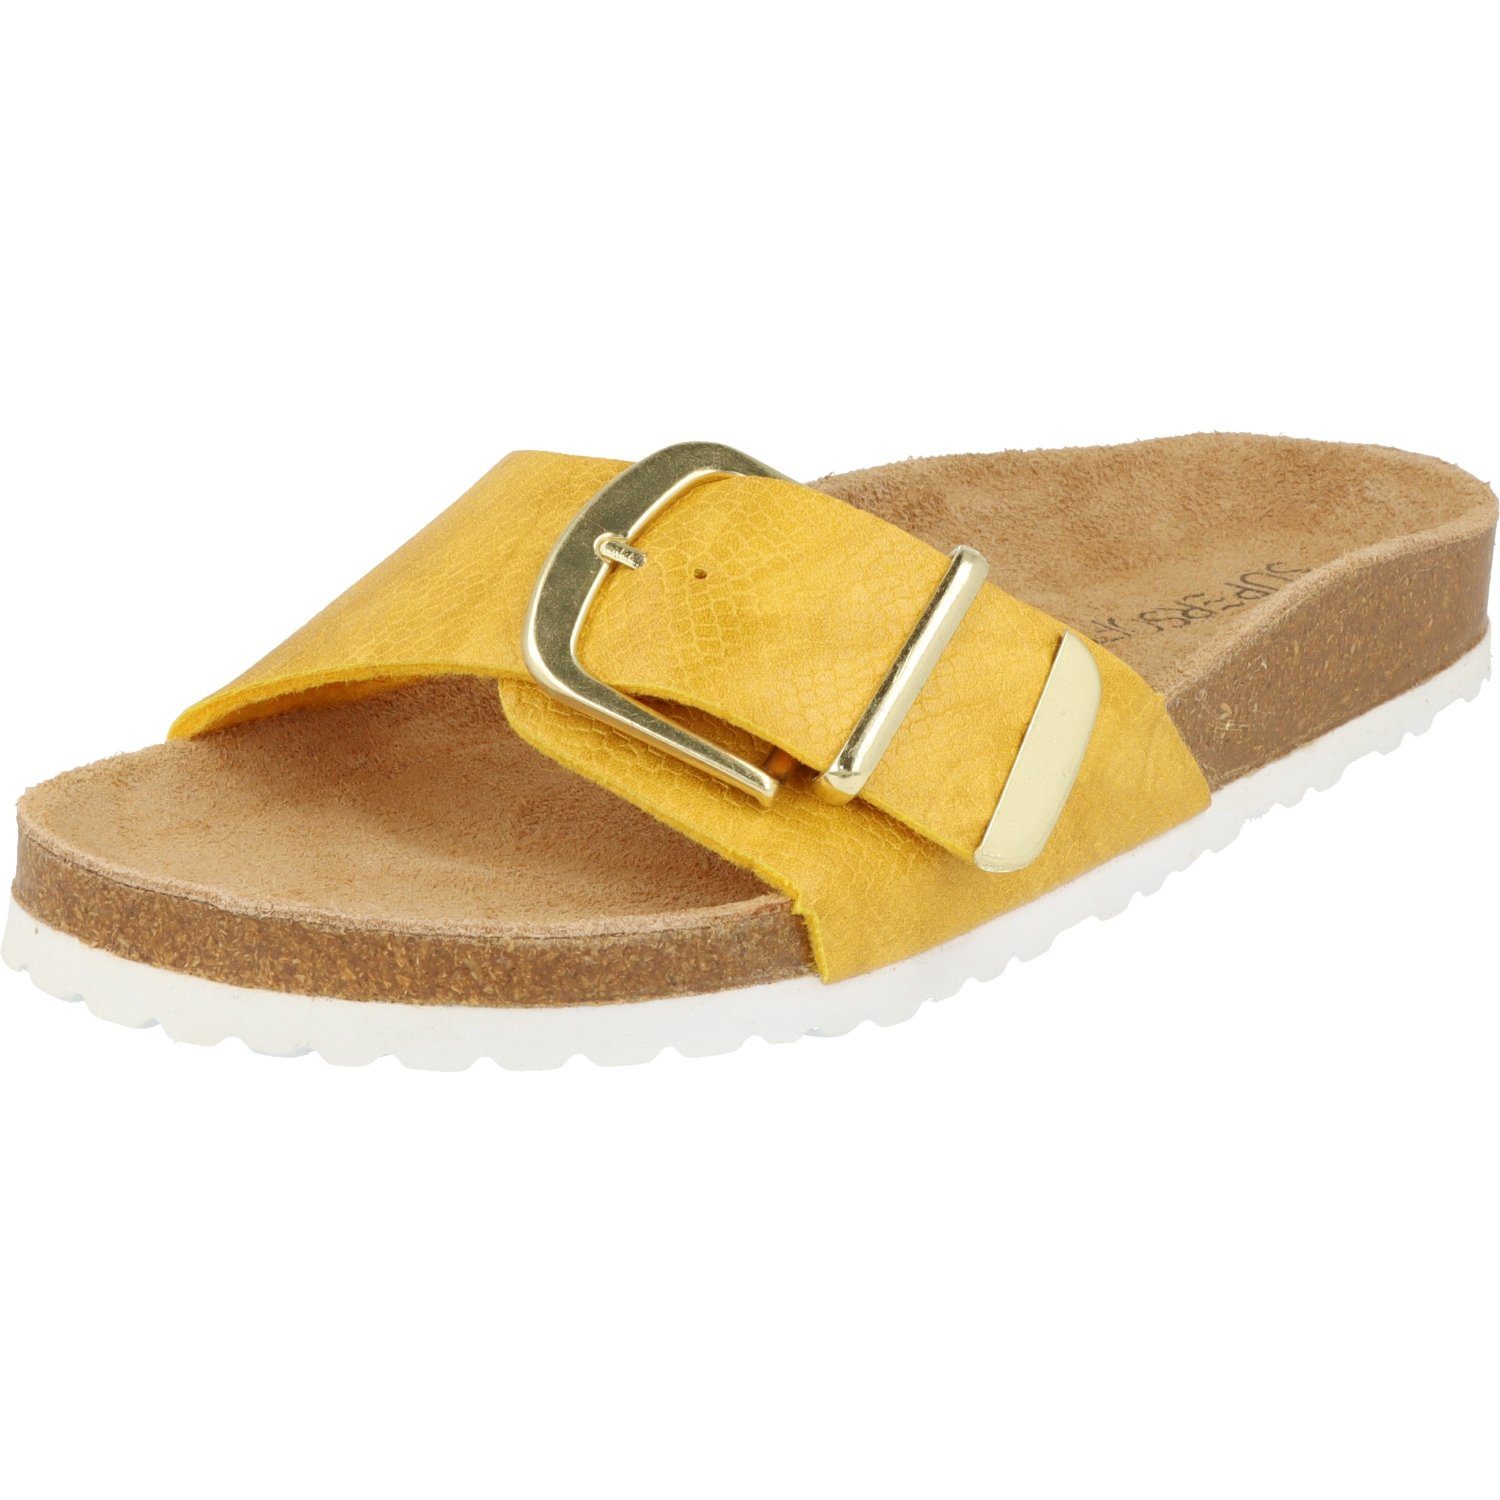 SUPERSOFT »274-266 Damen Pantoffel Hausschuhe Leder-Fußbett Yellow  Schnalle« Pantolette online kaufen | OTTO